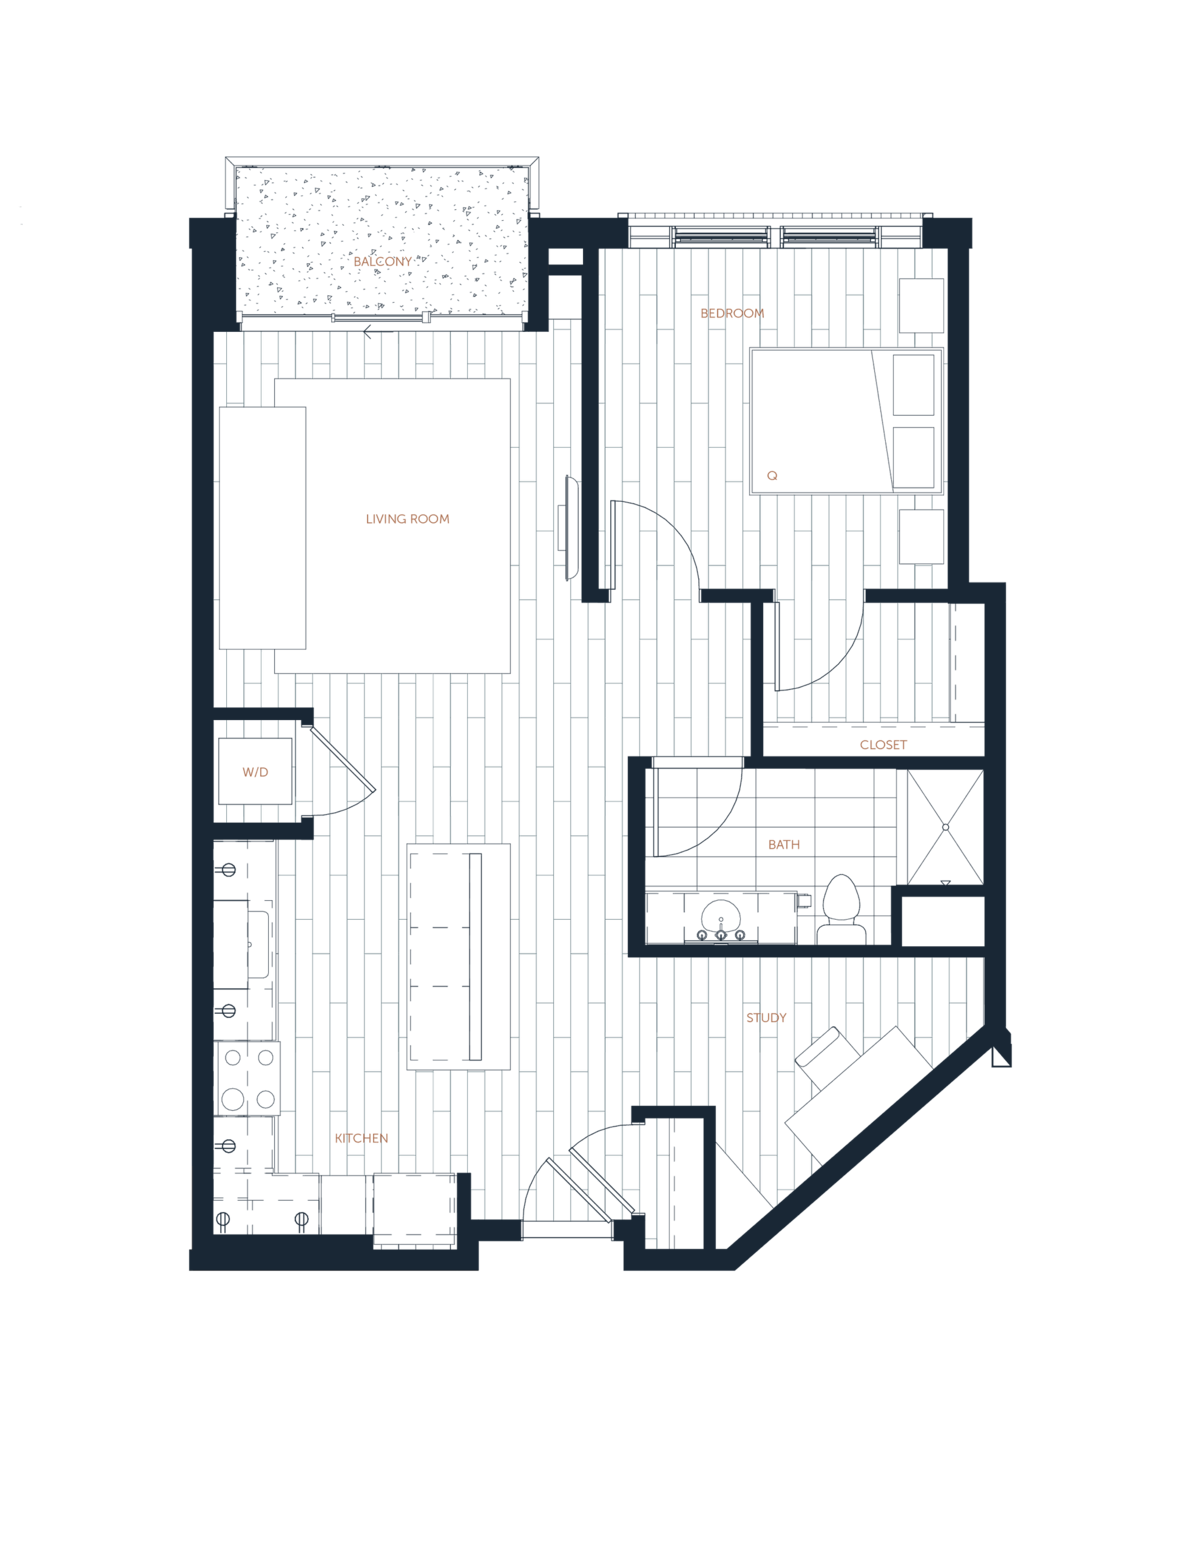 Floorplan diagram for A7, showing 1 bedroom